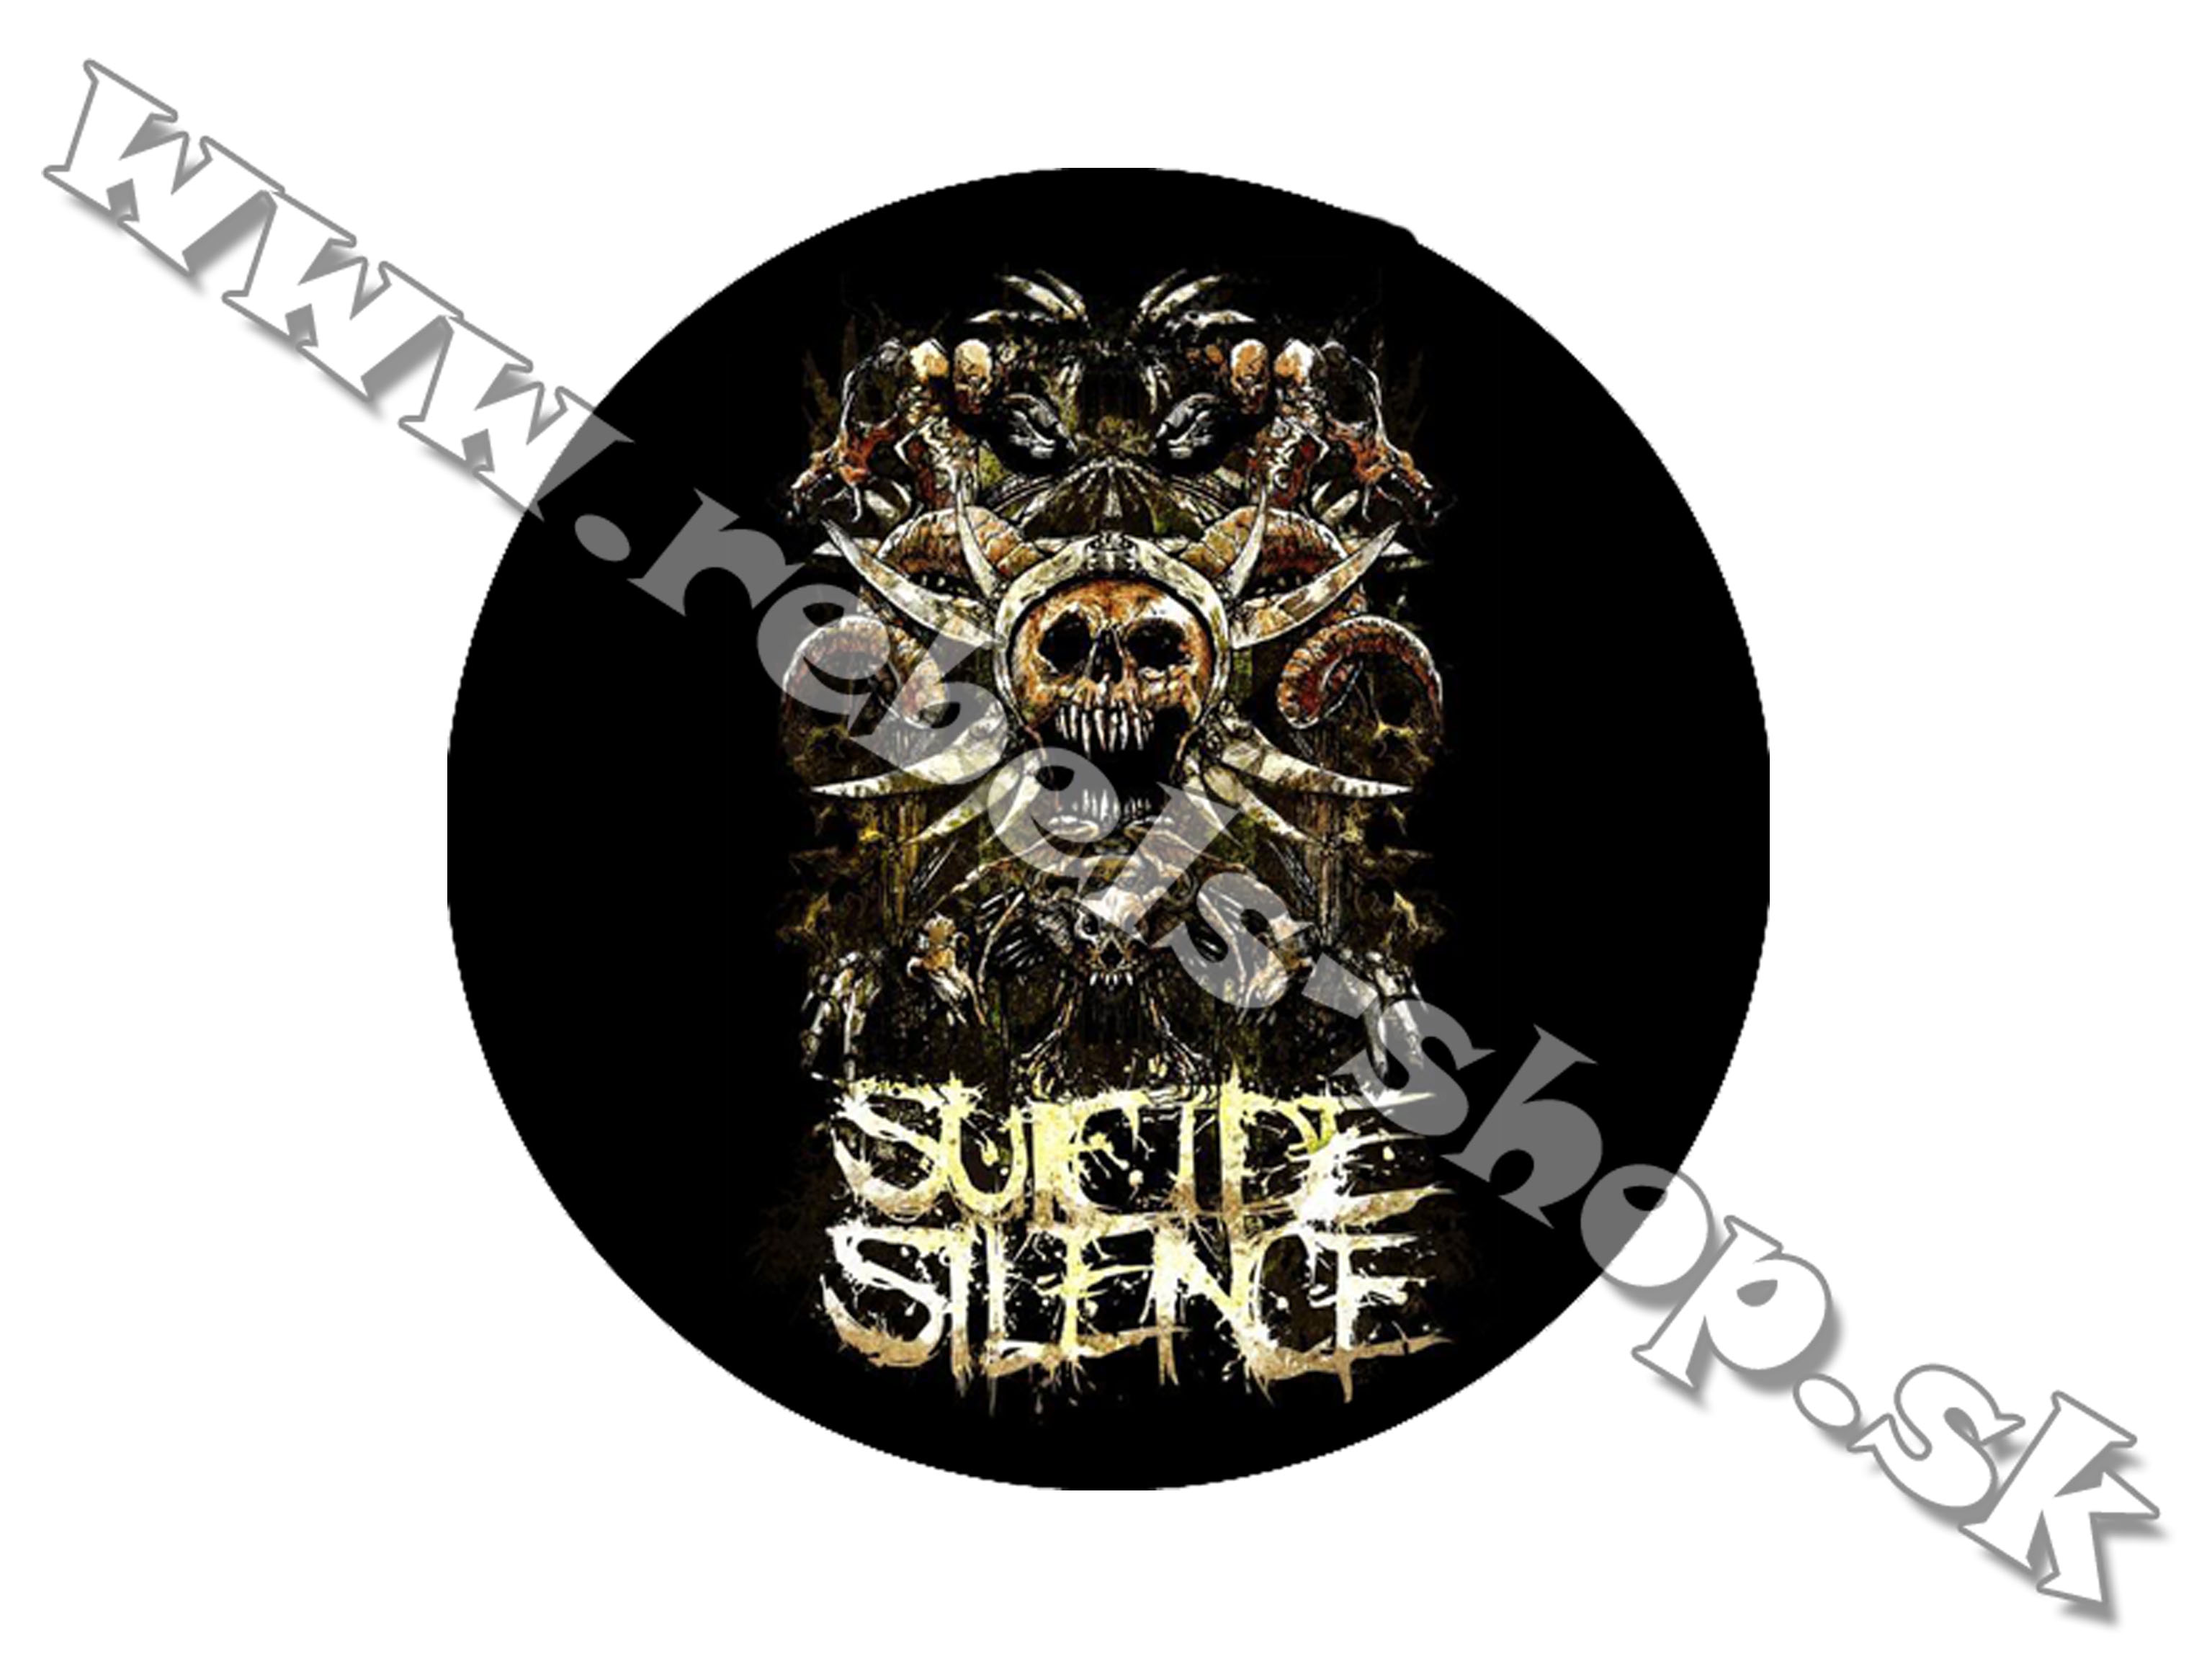 Odznak "Suicide Silence"